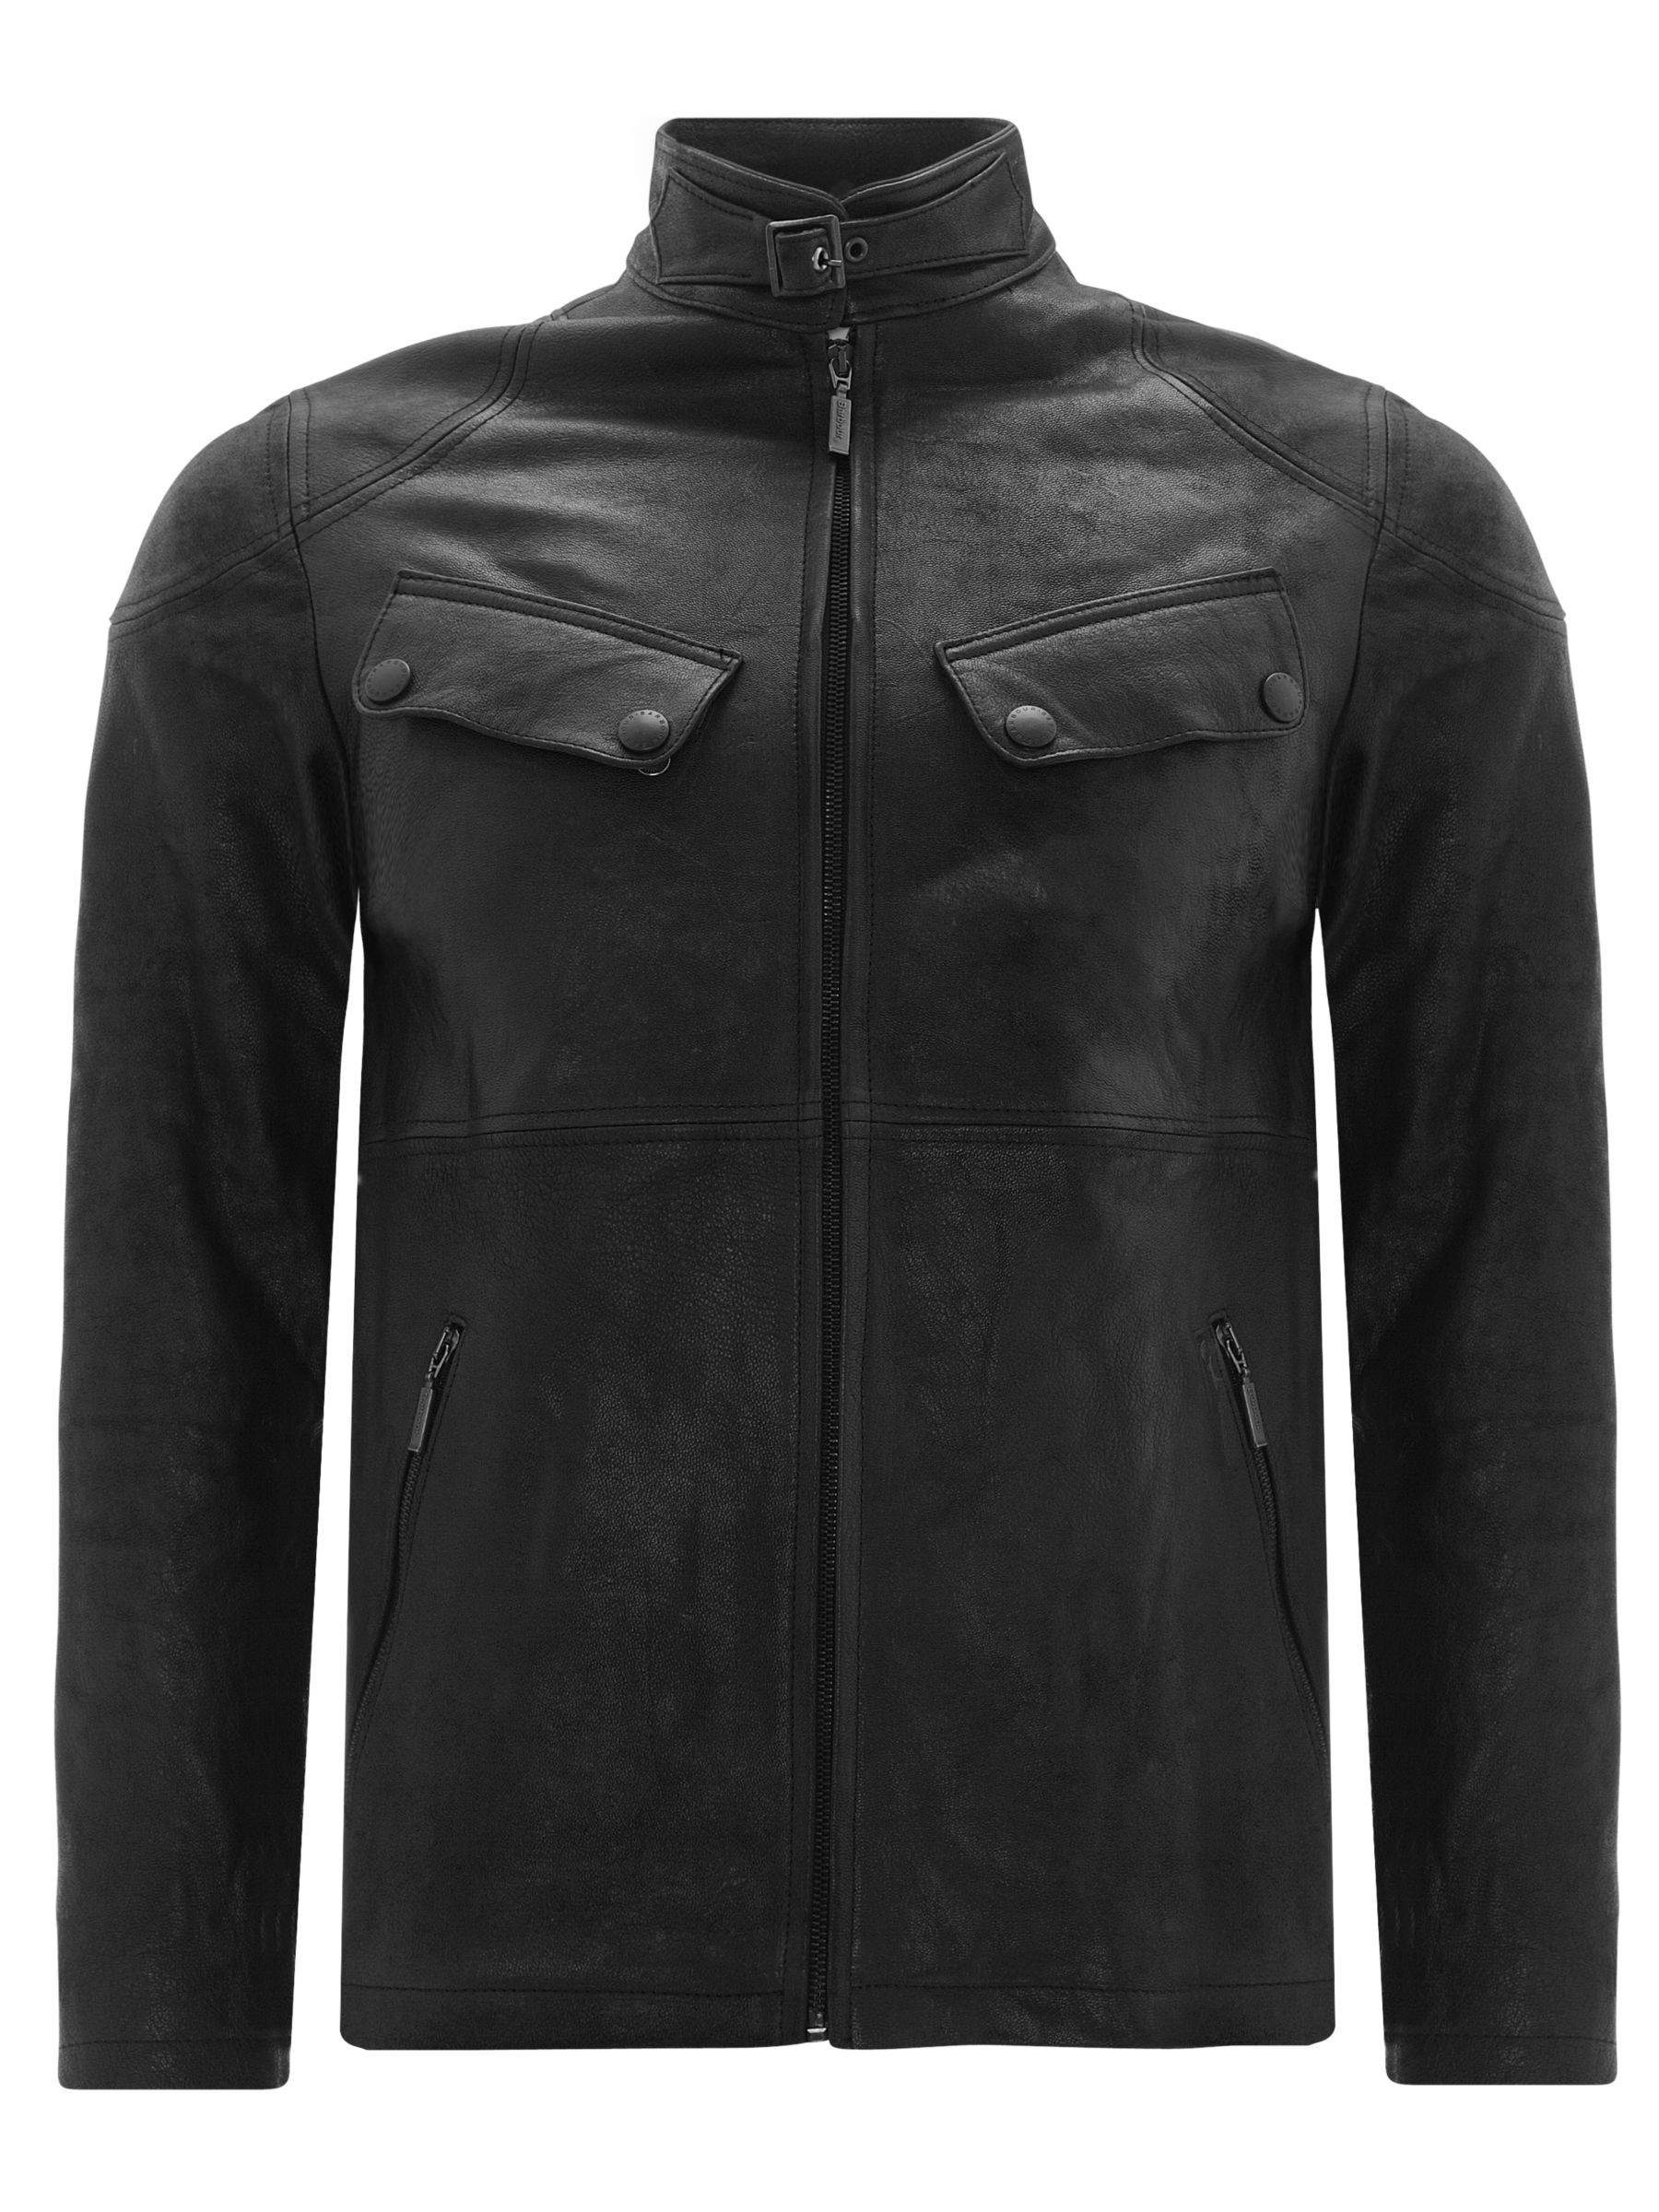 barbour john leather jacket